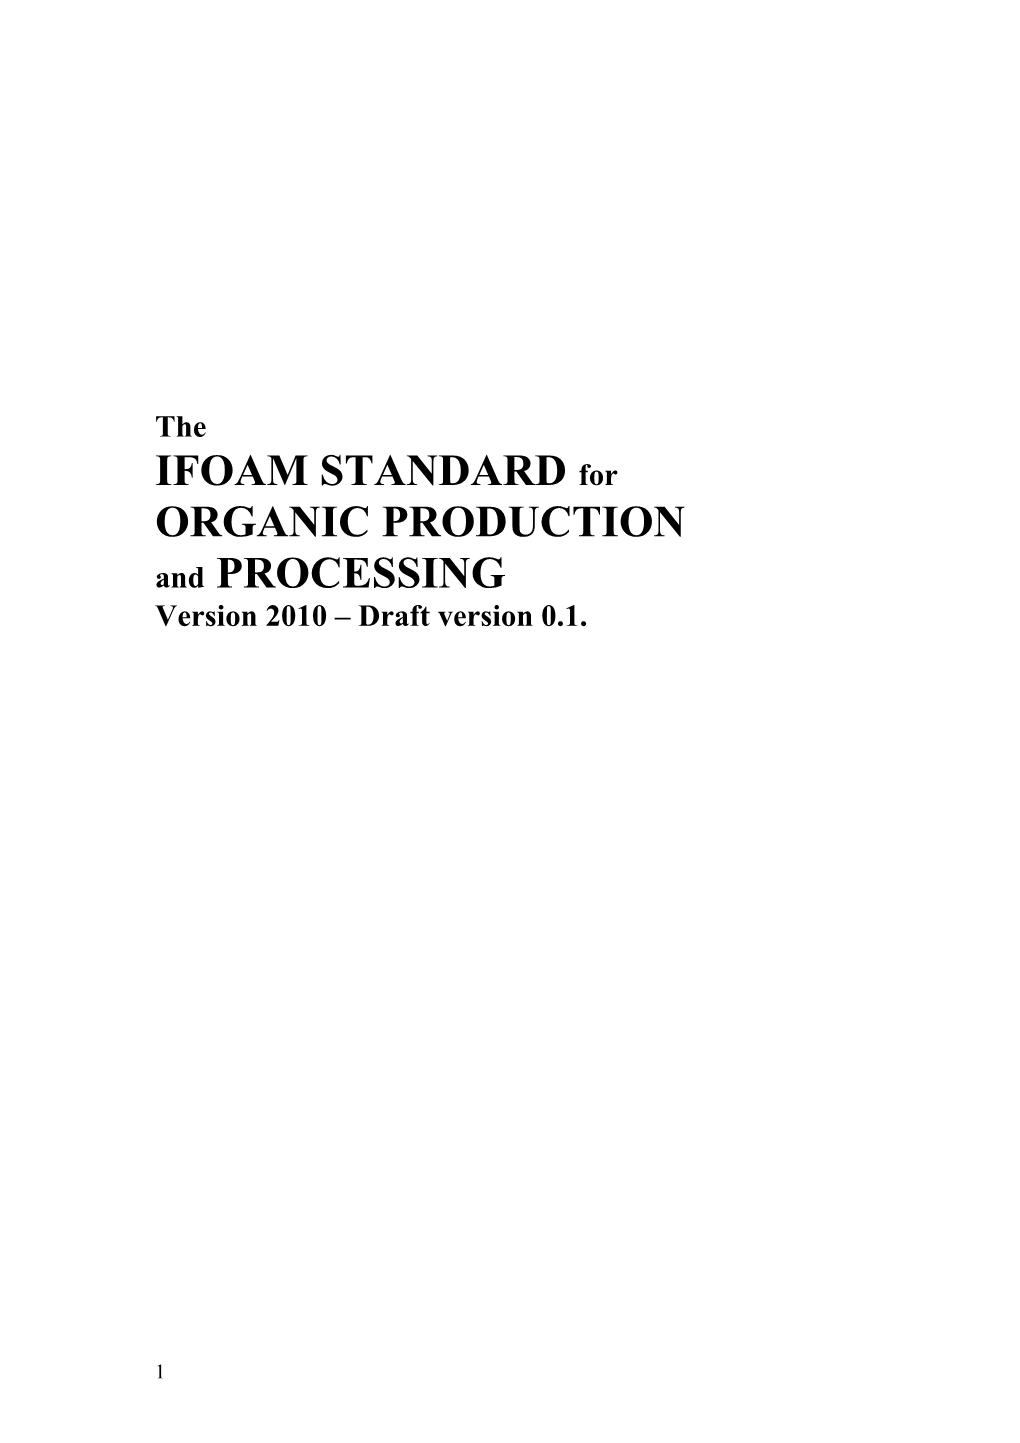 IFOAM STANDARD For s1